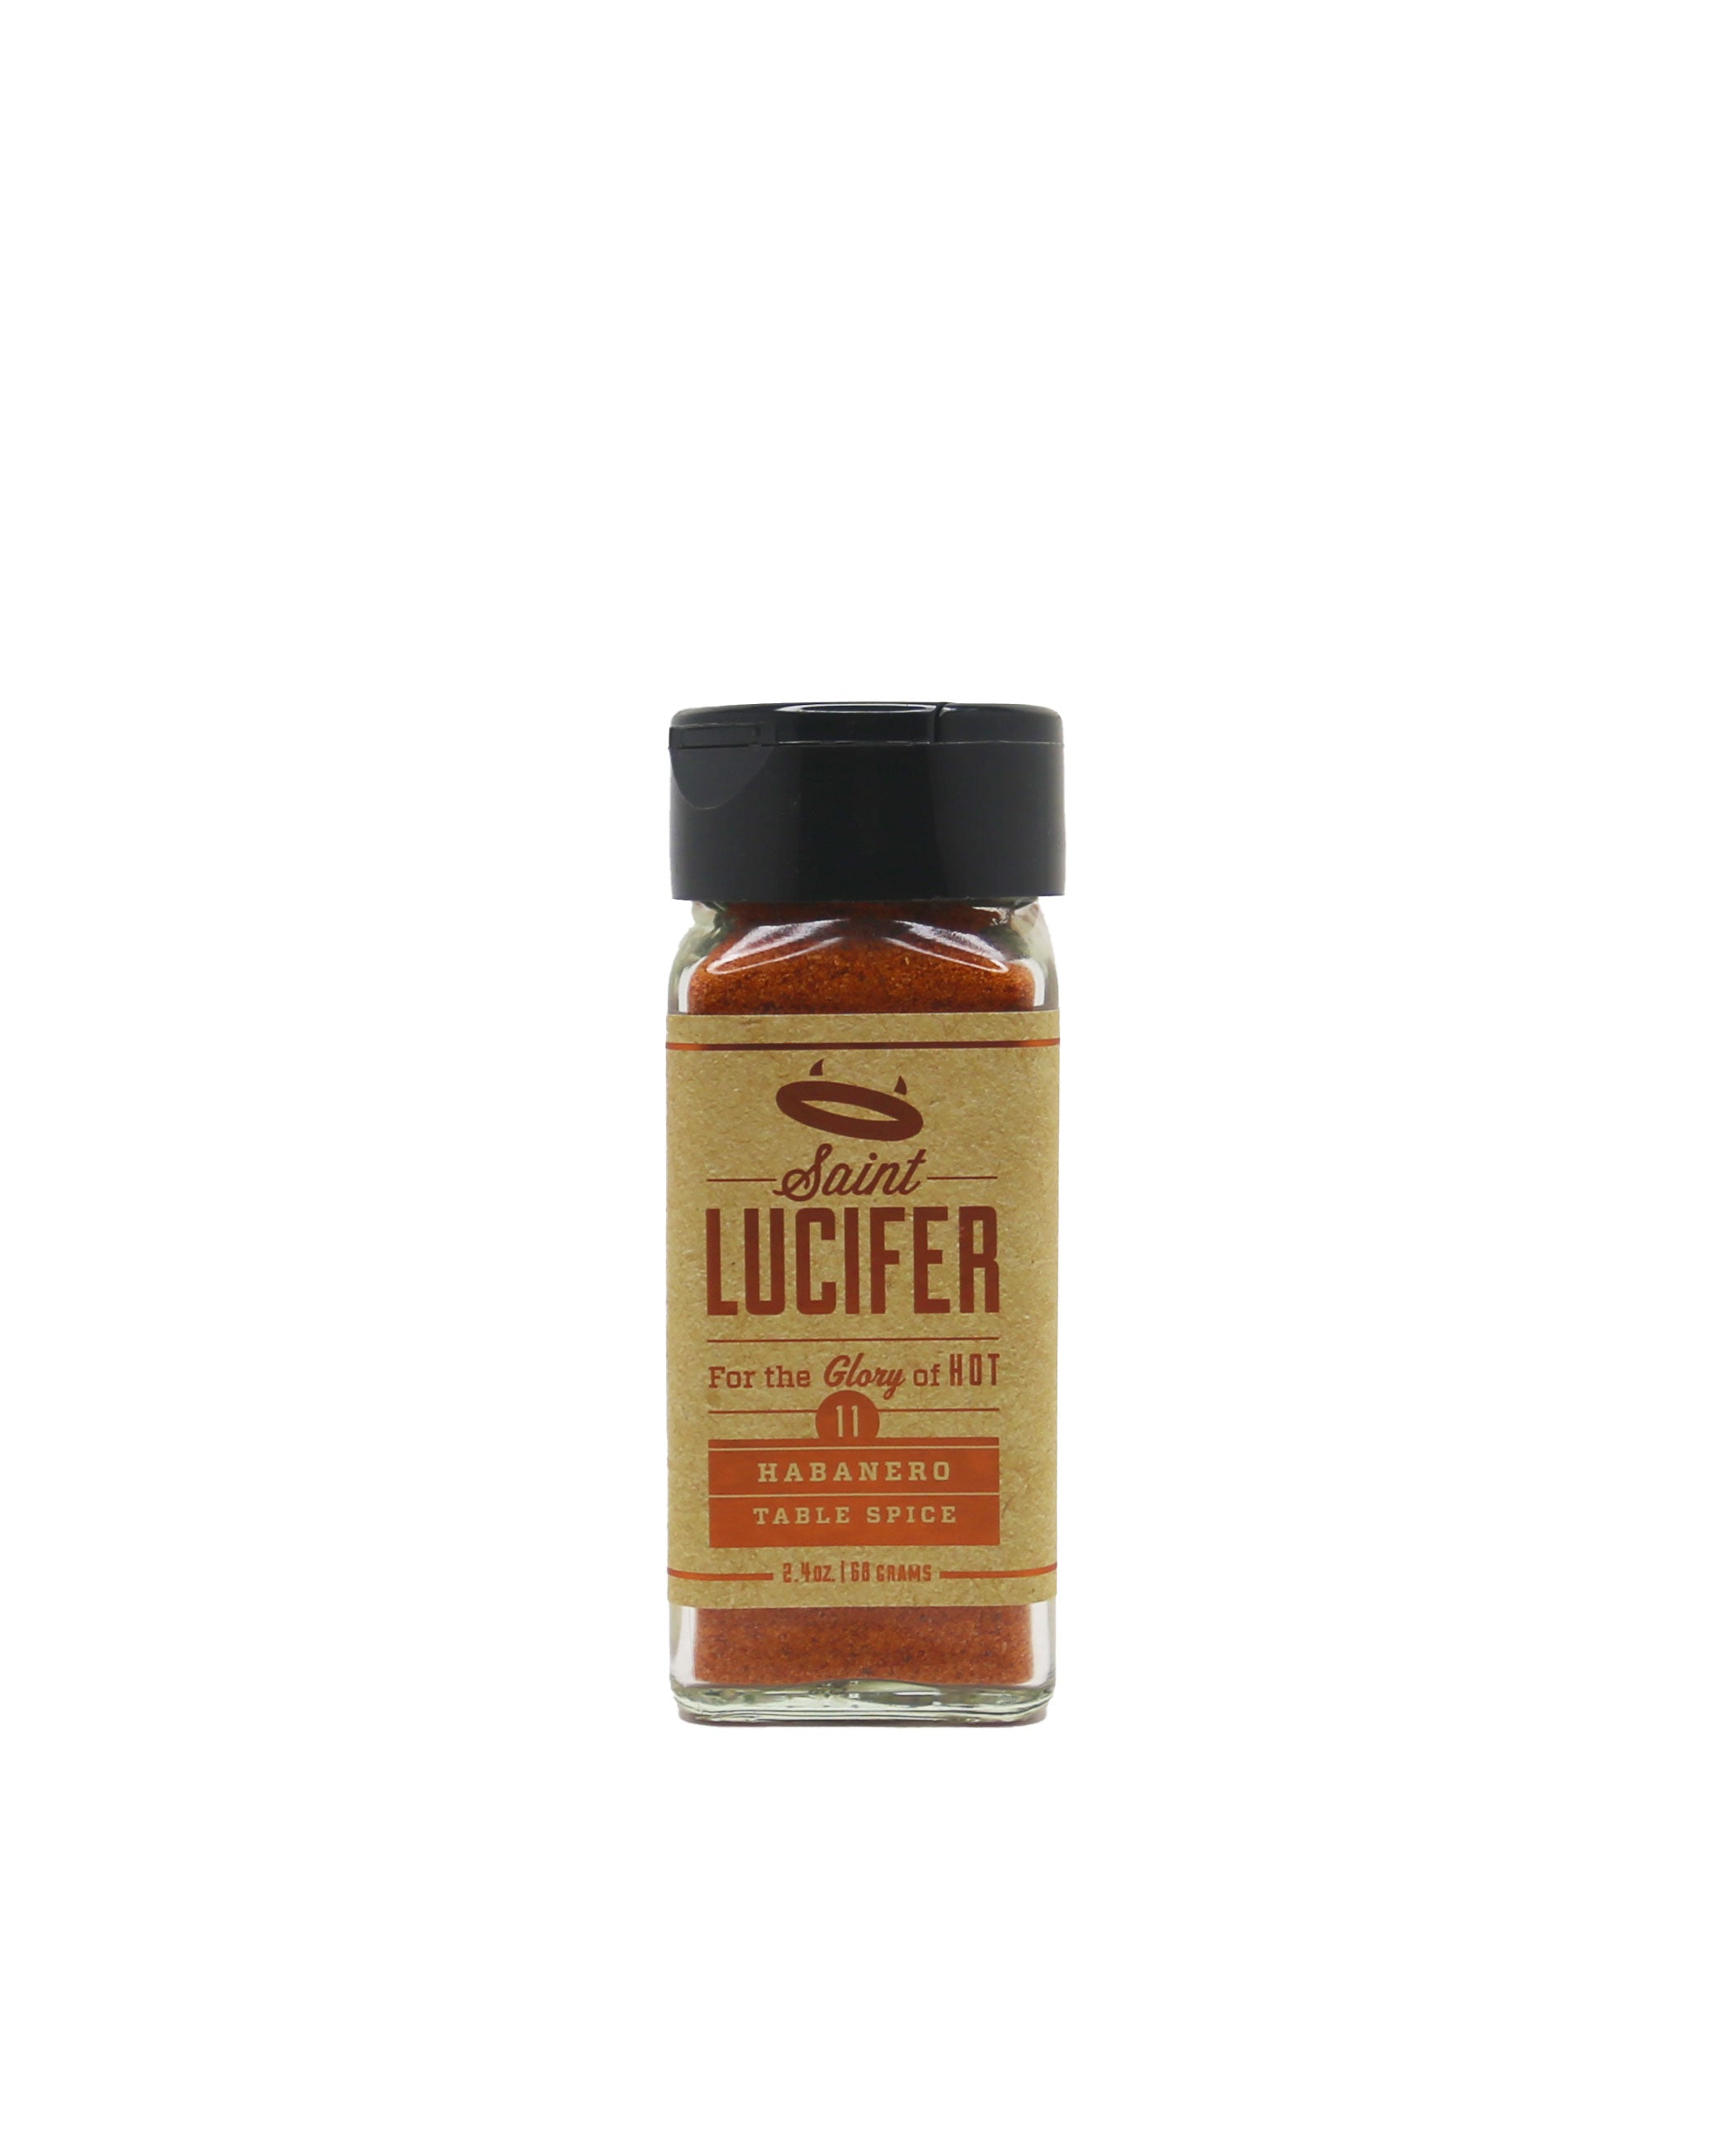 Saint Lucifer Habanero Spice - Olive Oil Etcetera - Bucks county's gourmet olive oil and vinegar shop